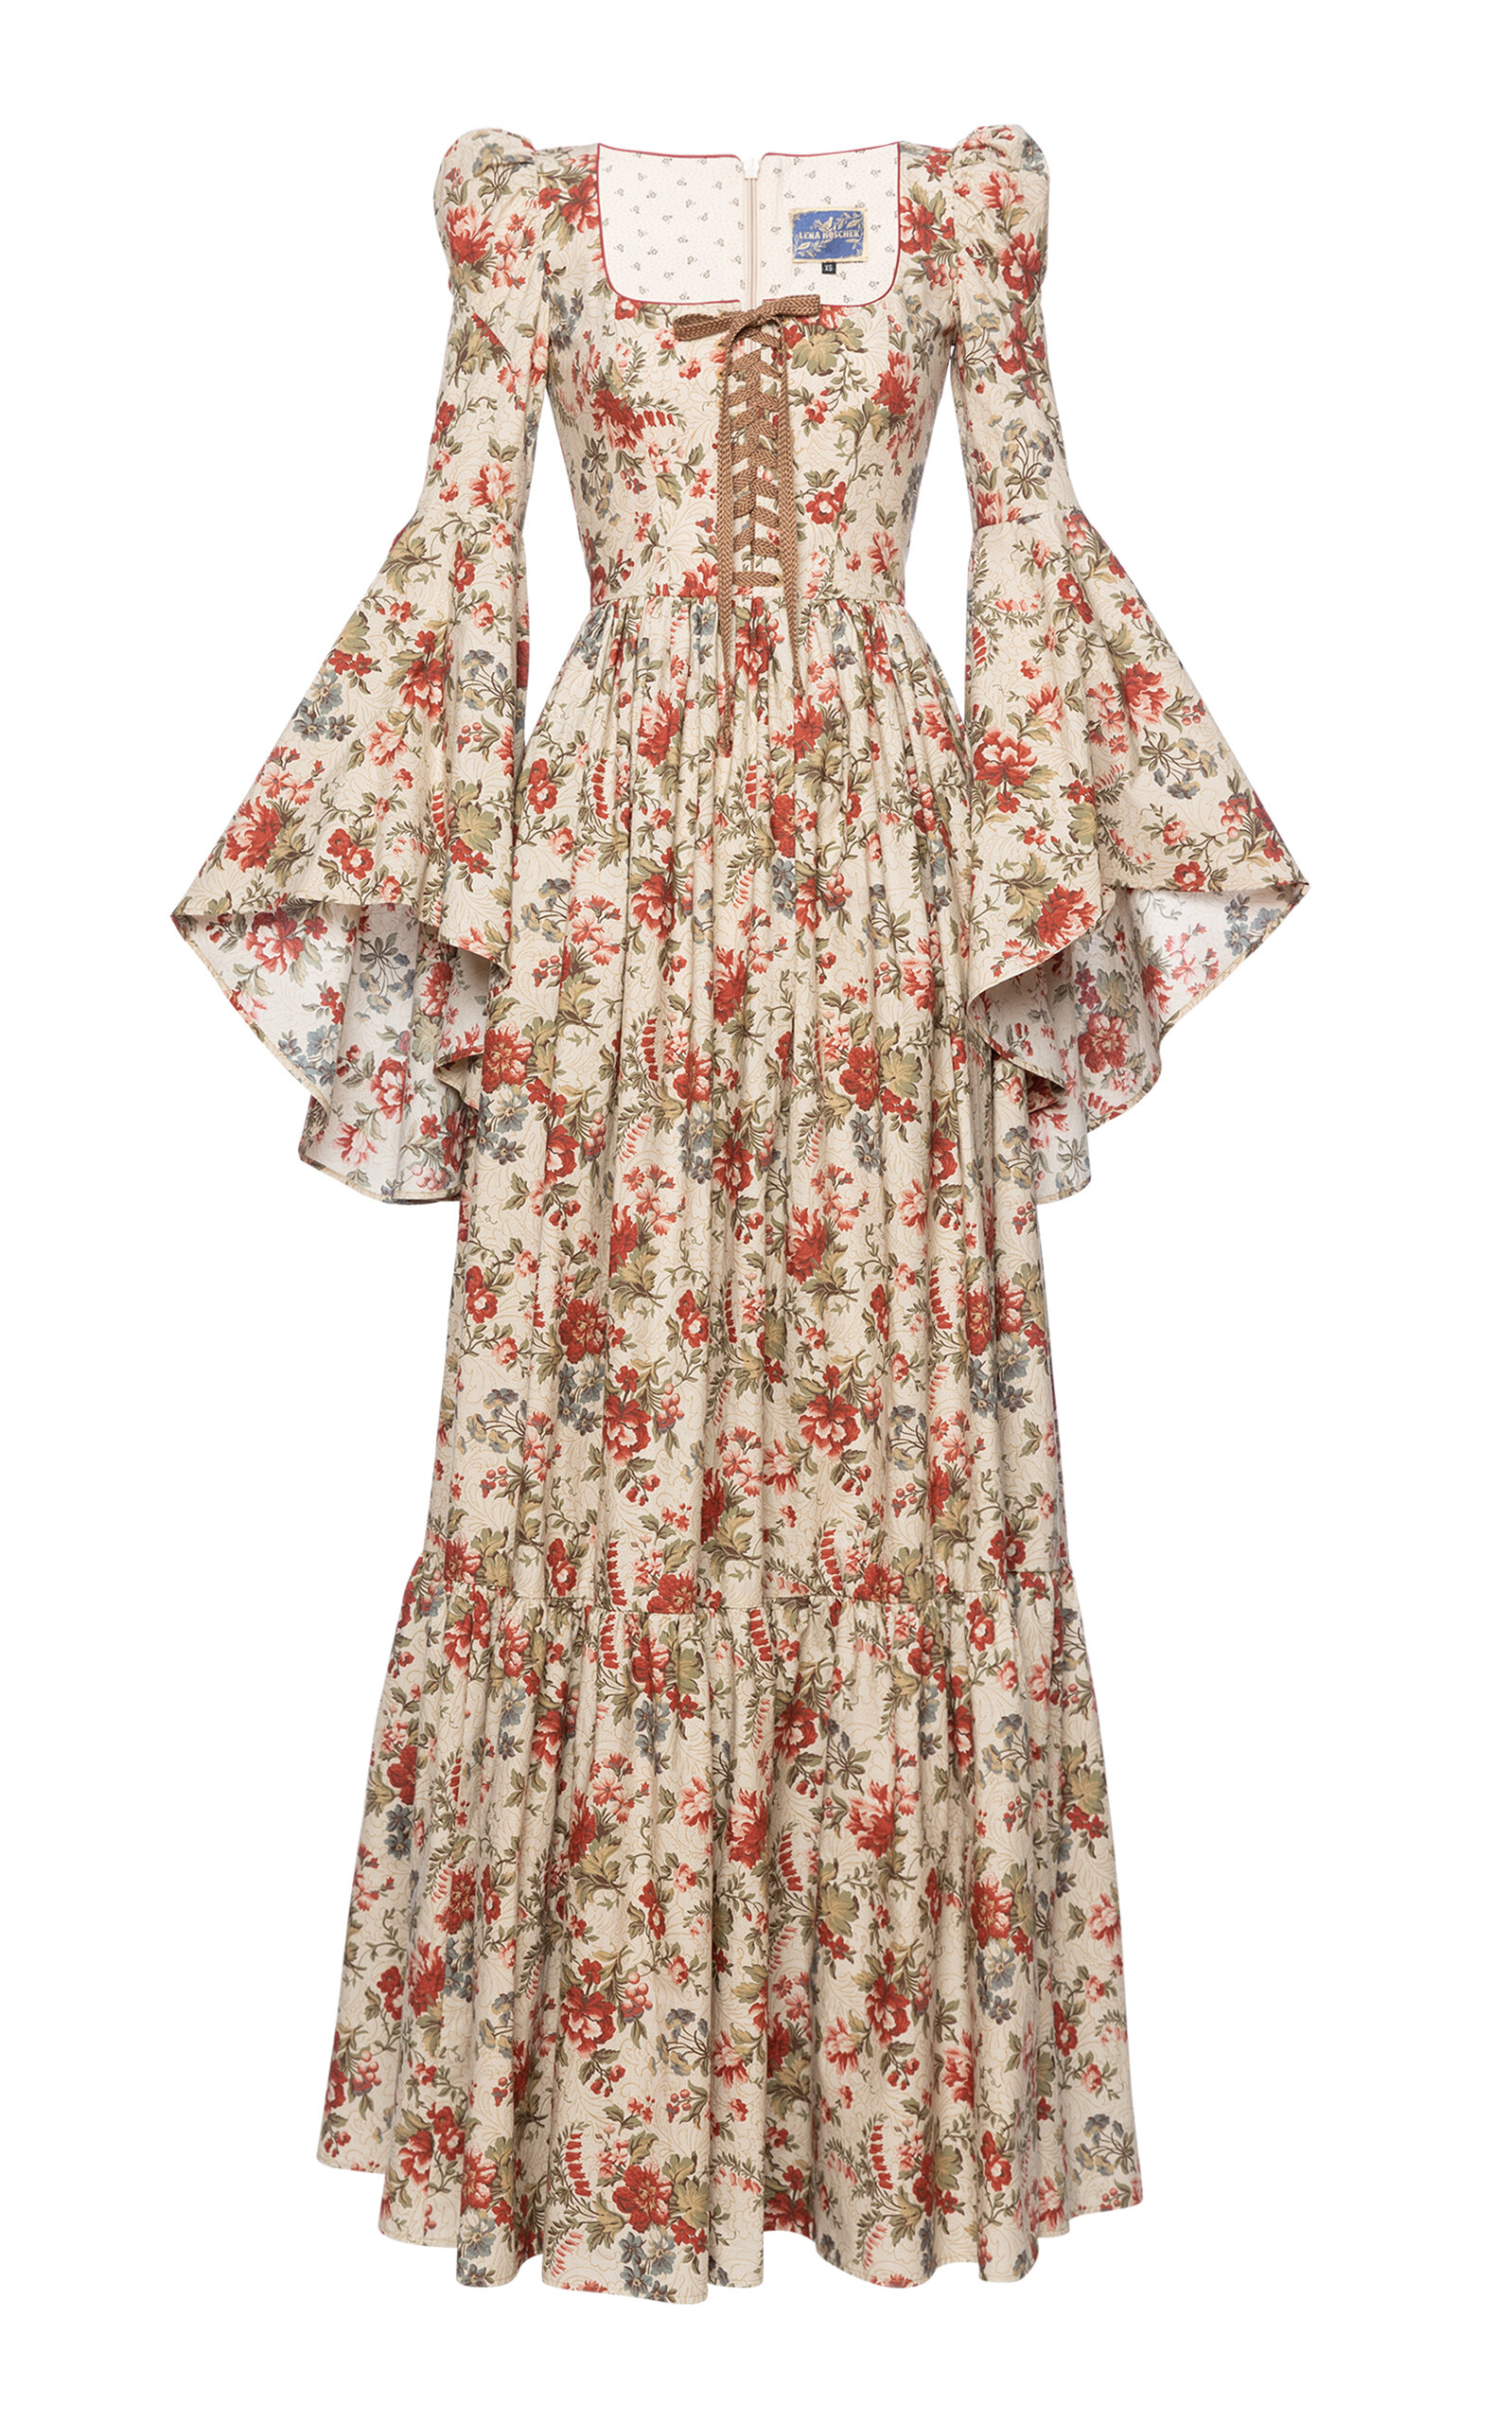 Lena Hoschek Women's Taylor Cotton Maxi Dress In Floral